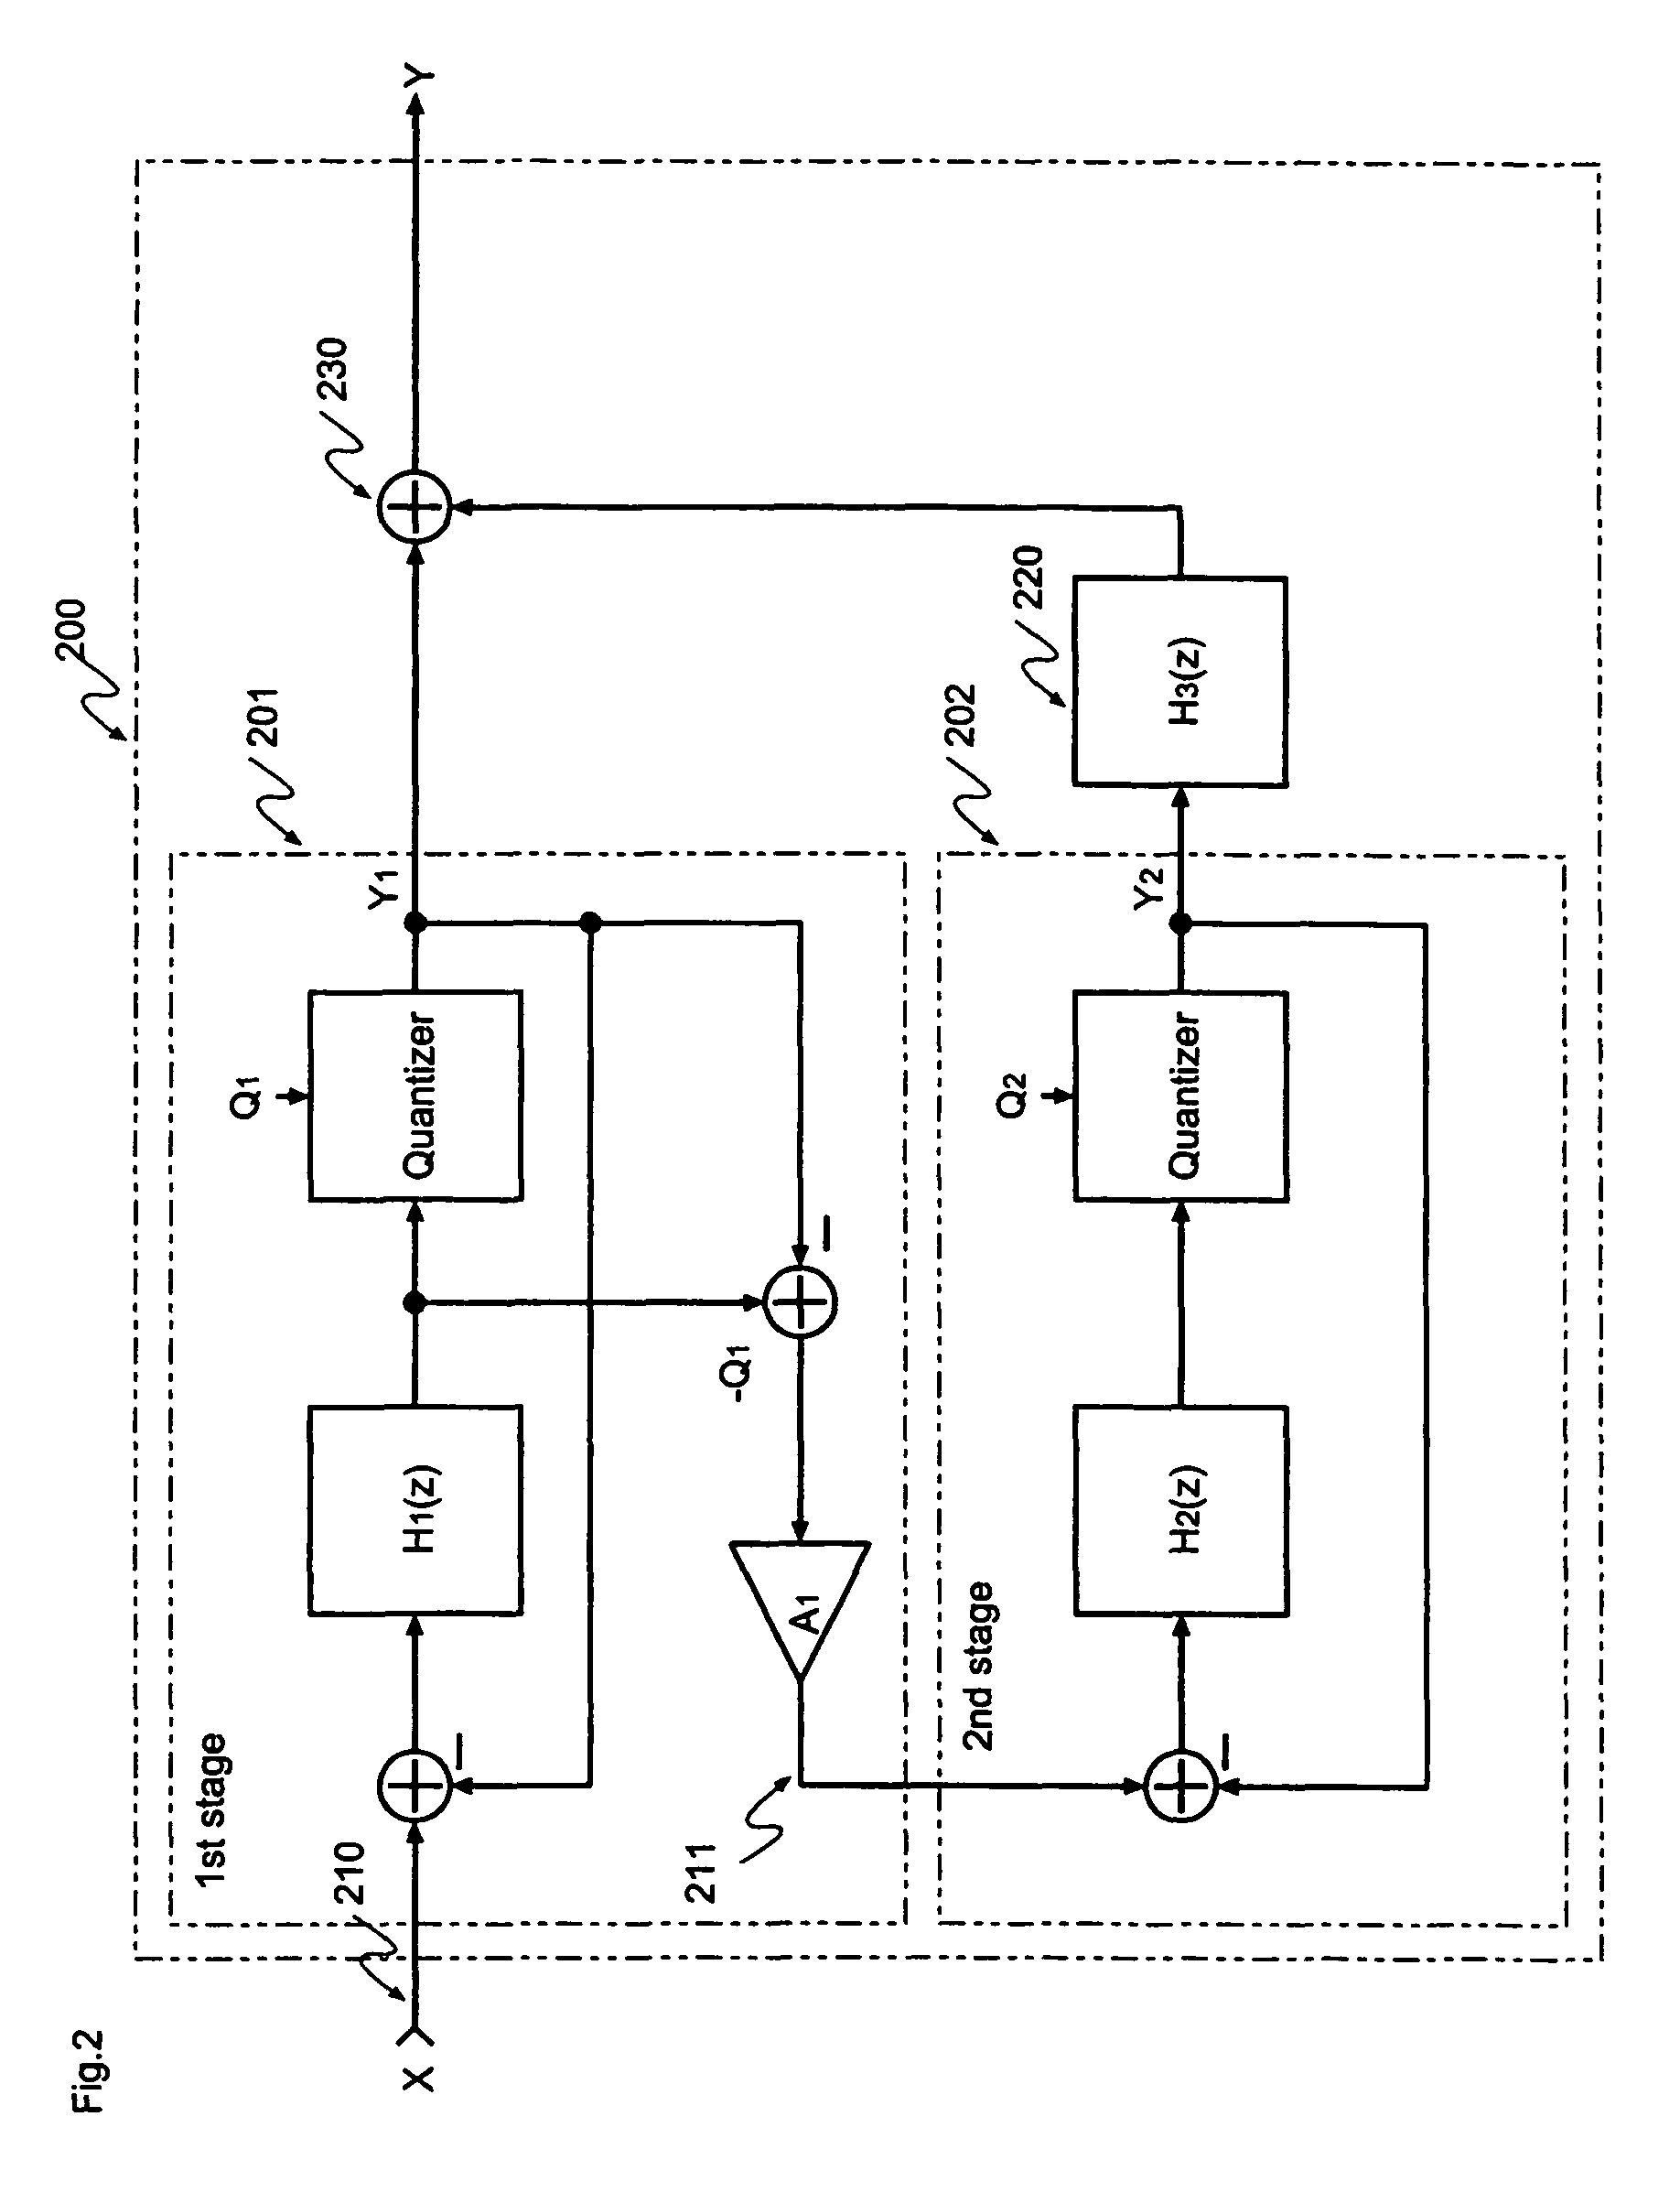 Digital/analogue conversion apparatus